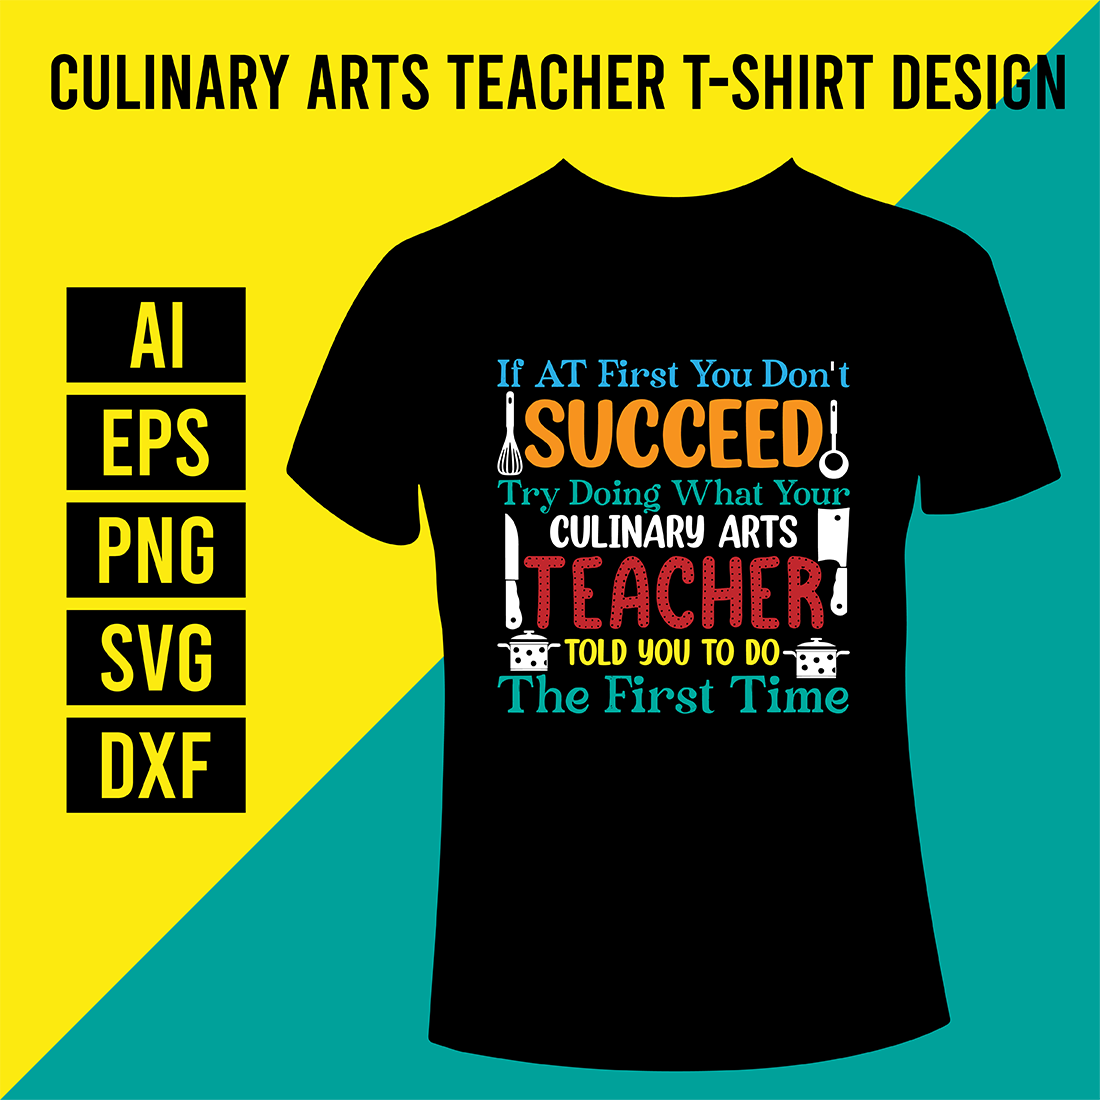 Culinary Arts Teacher T-Shirt Design cover image.